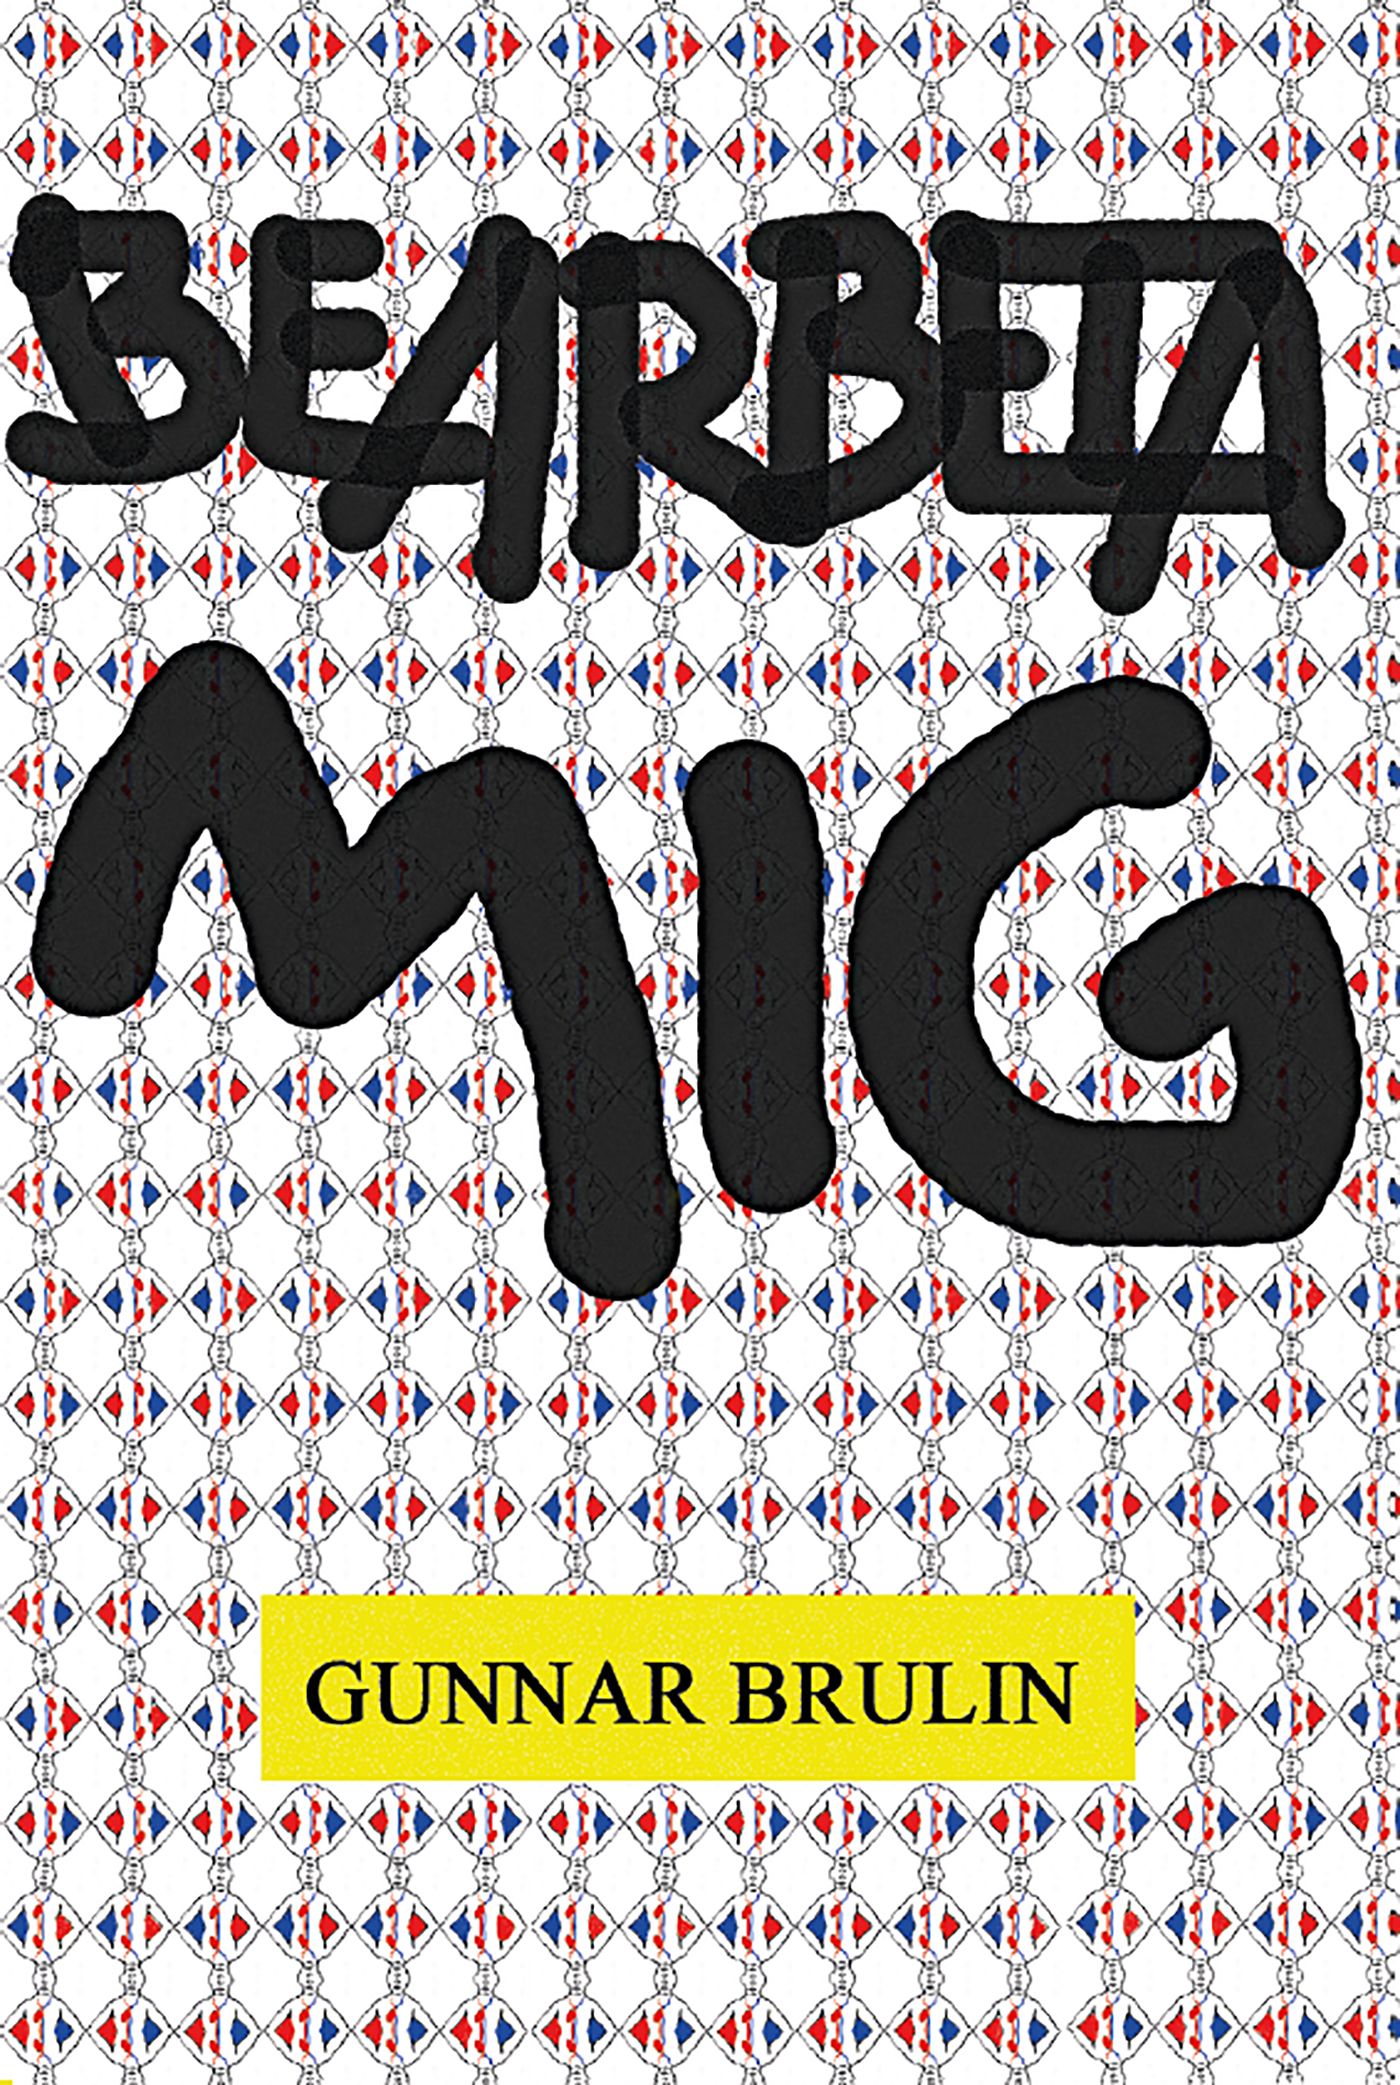 Bearbeta mig, e-bog af Gunnar Brulin